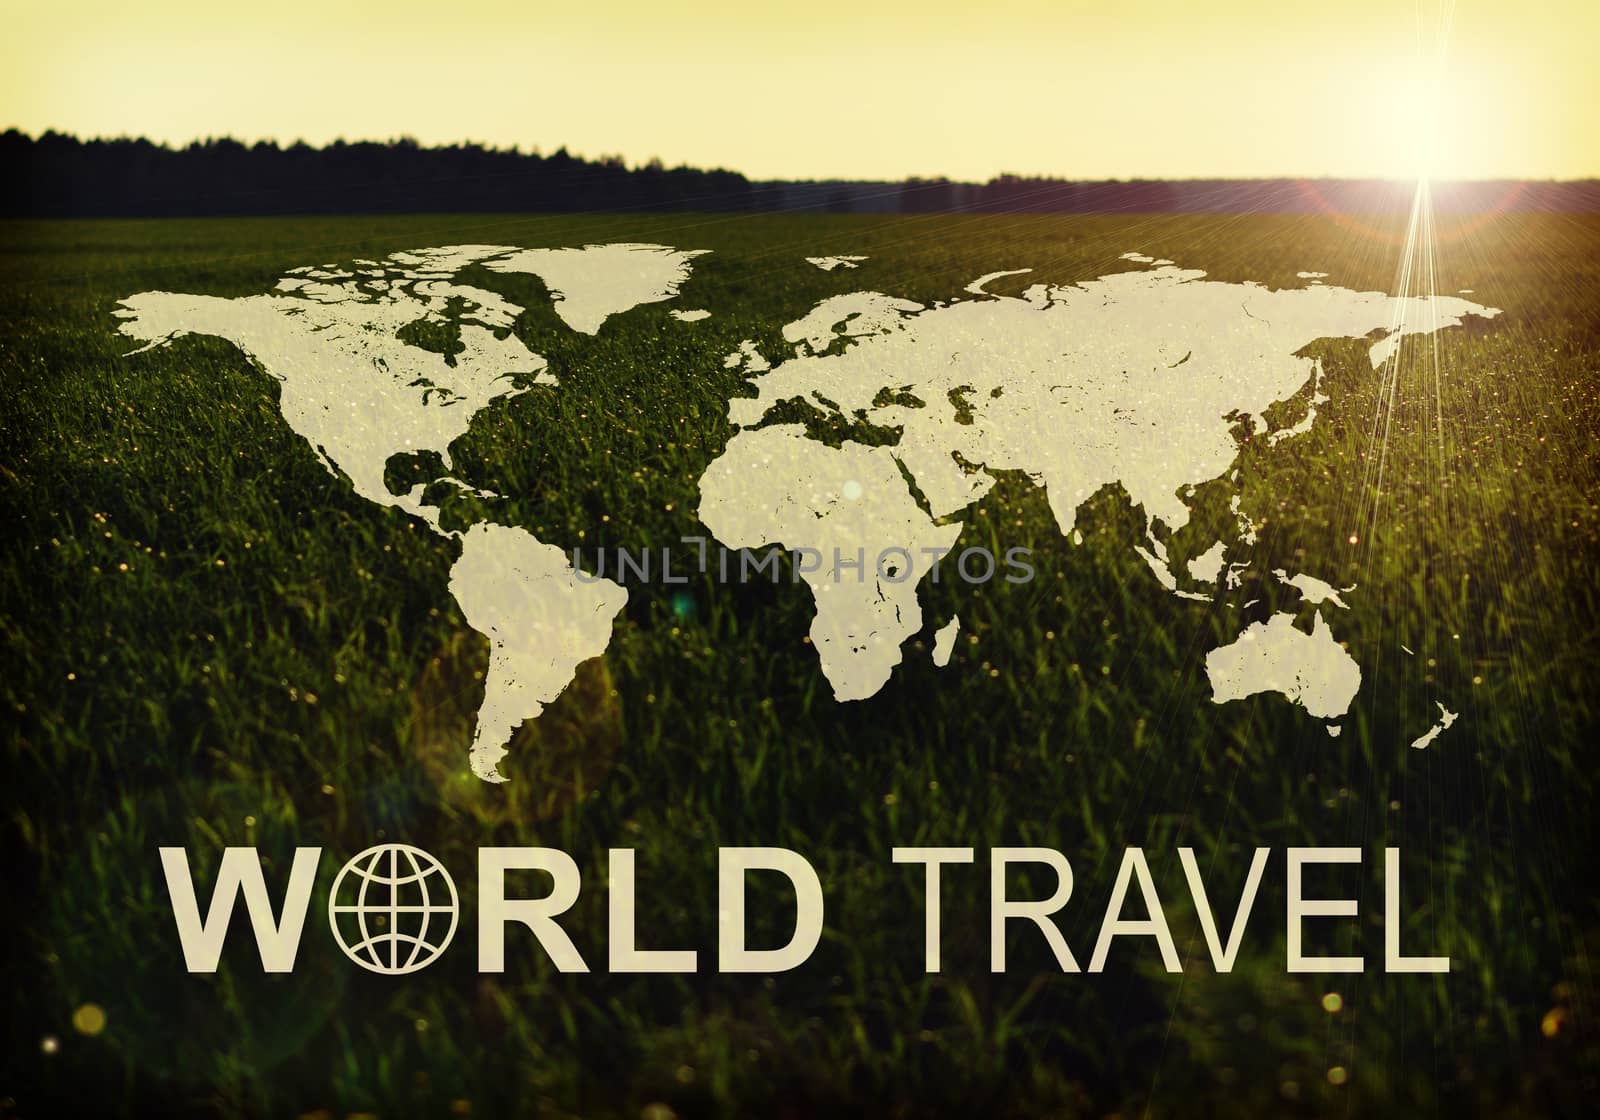 World Travel header by cherezoff